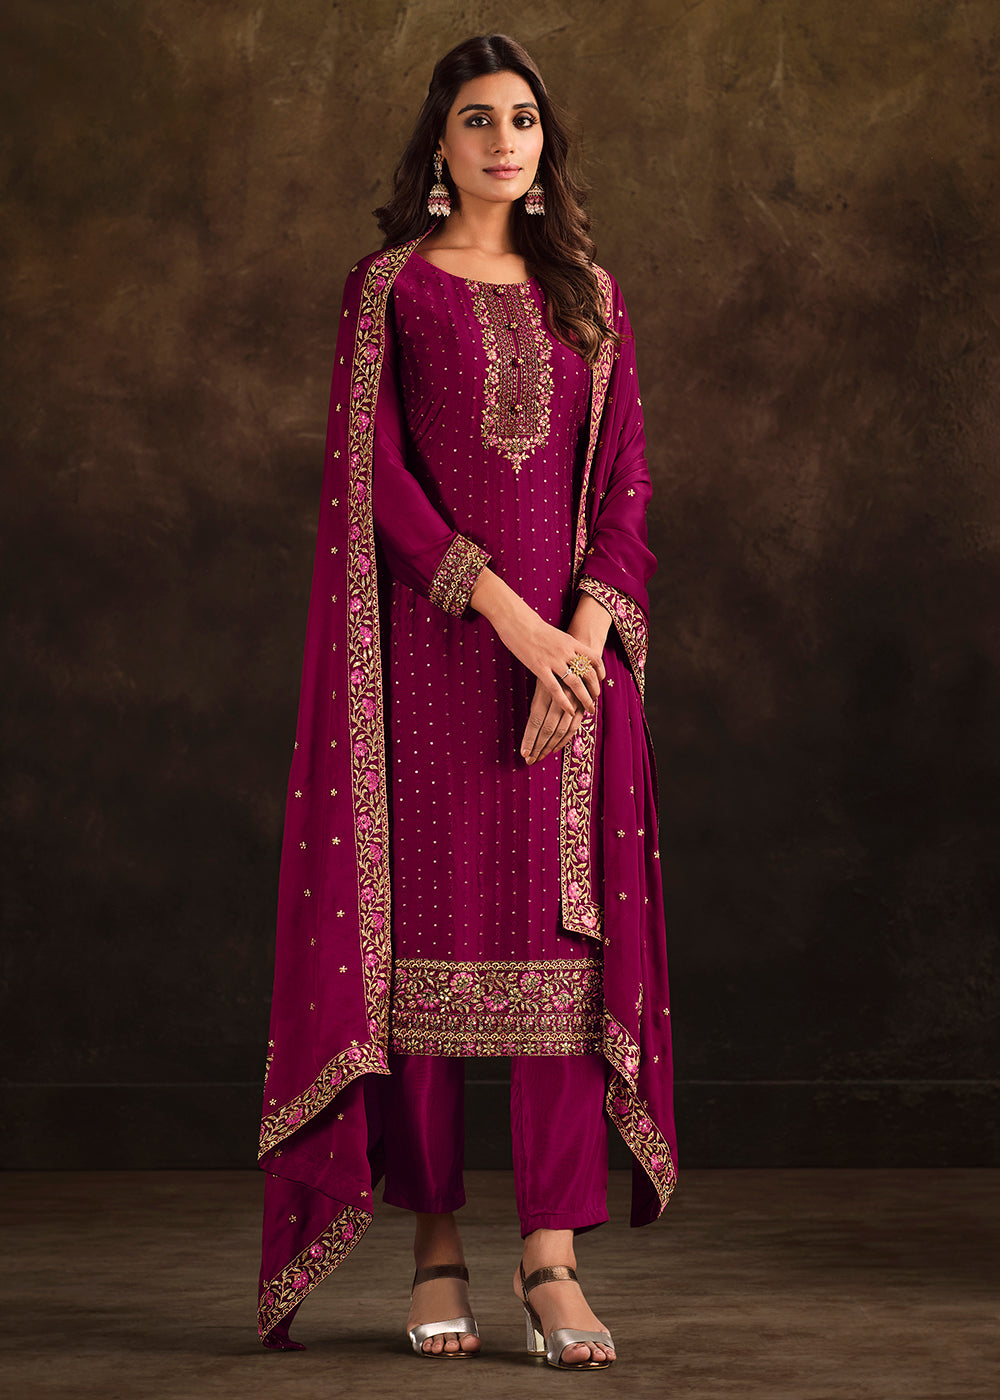 Buy Now Fancy Georgette Elegant Magenta Pakistani Style Salwar Suit Online in USA, UK, Canada, Germany, Australia & Worldwide at Empress Clothing.